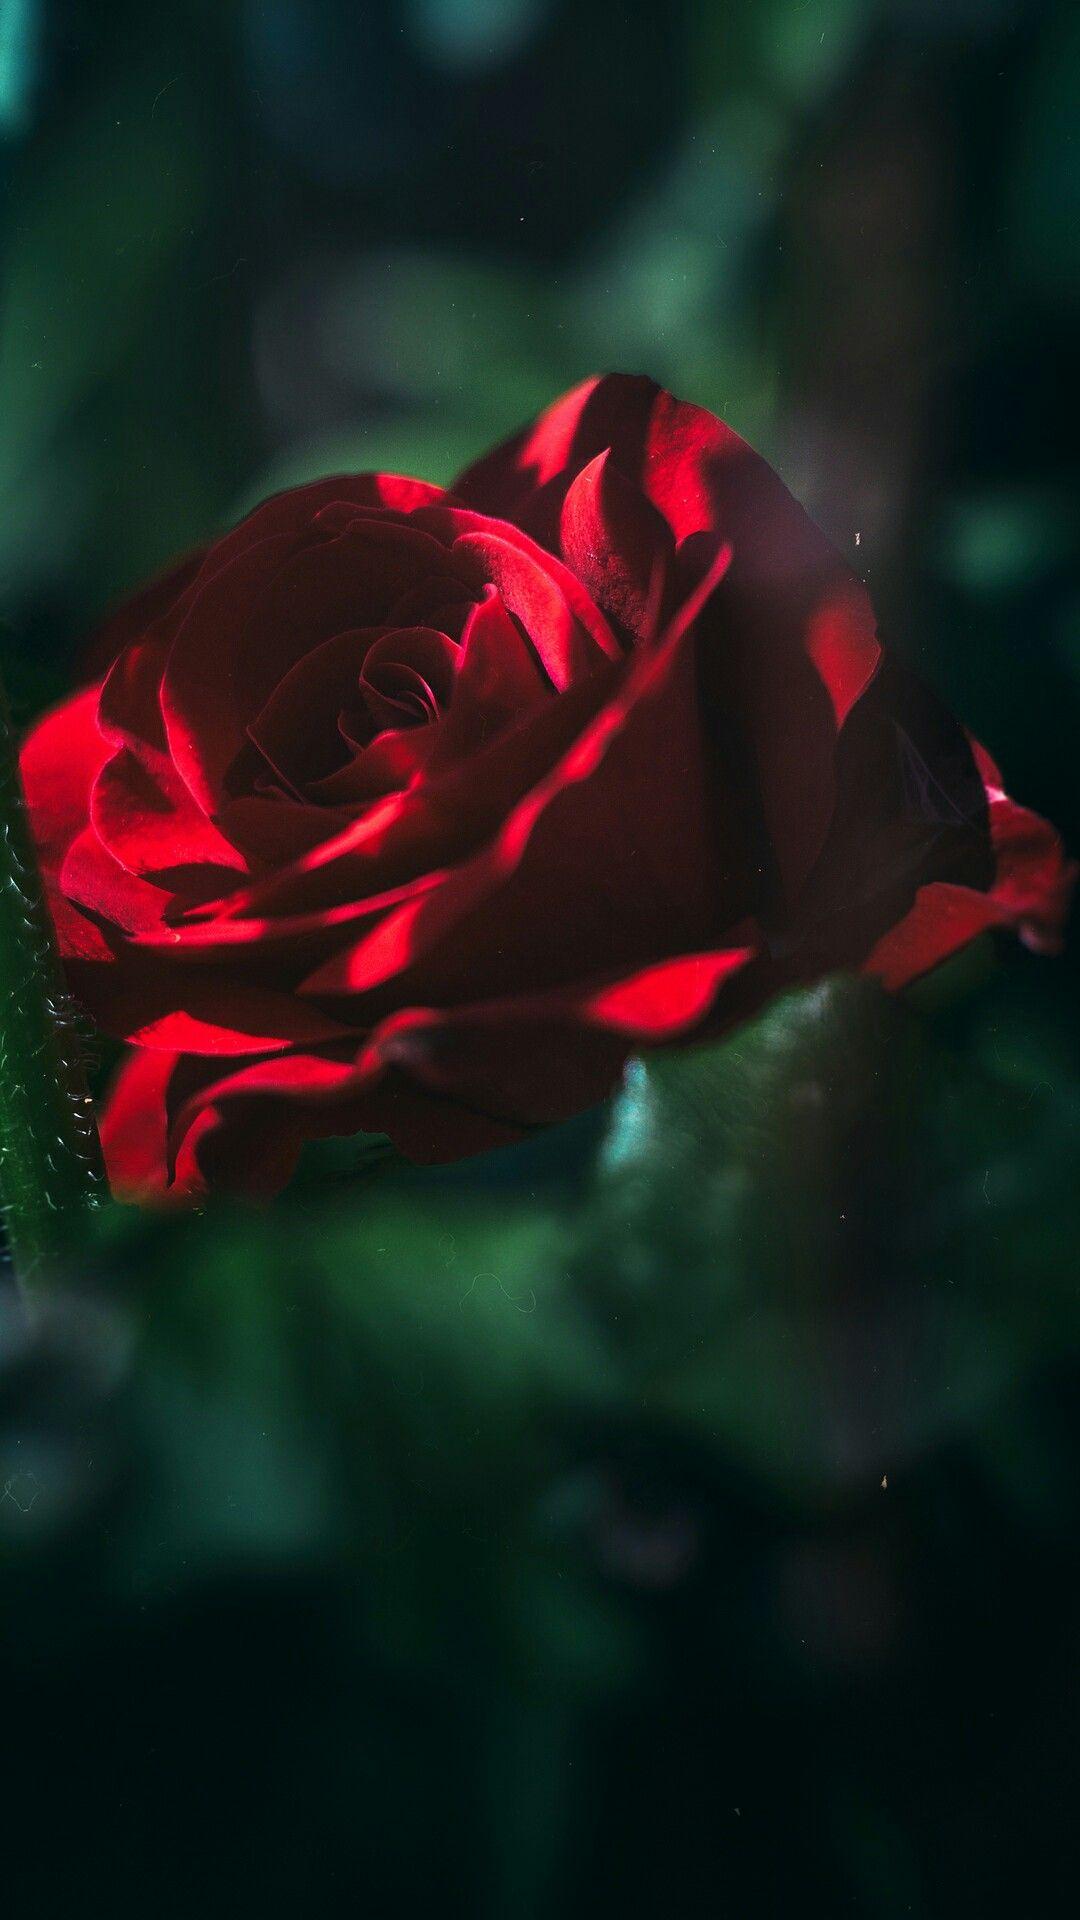 iPhone Wallpaper. Red, Garden roses, Rose, Green, Flower, Petal